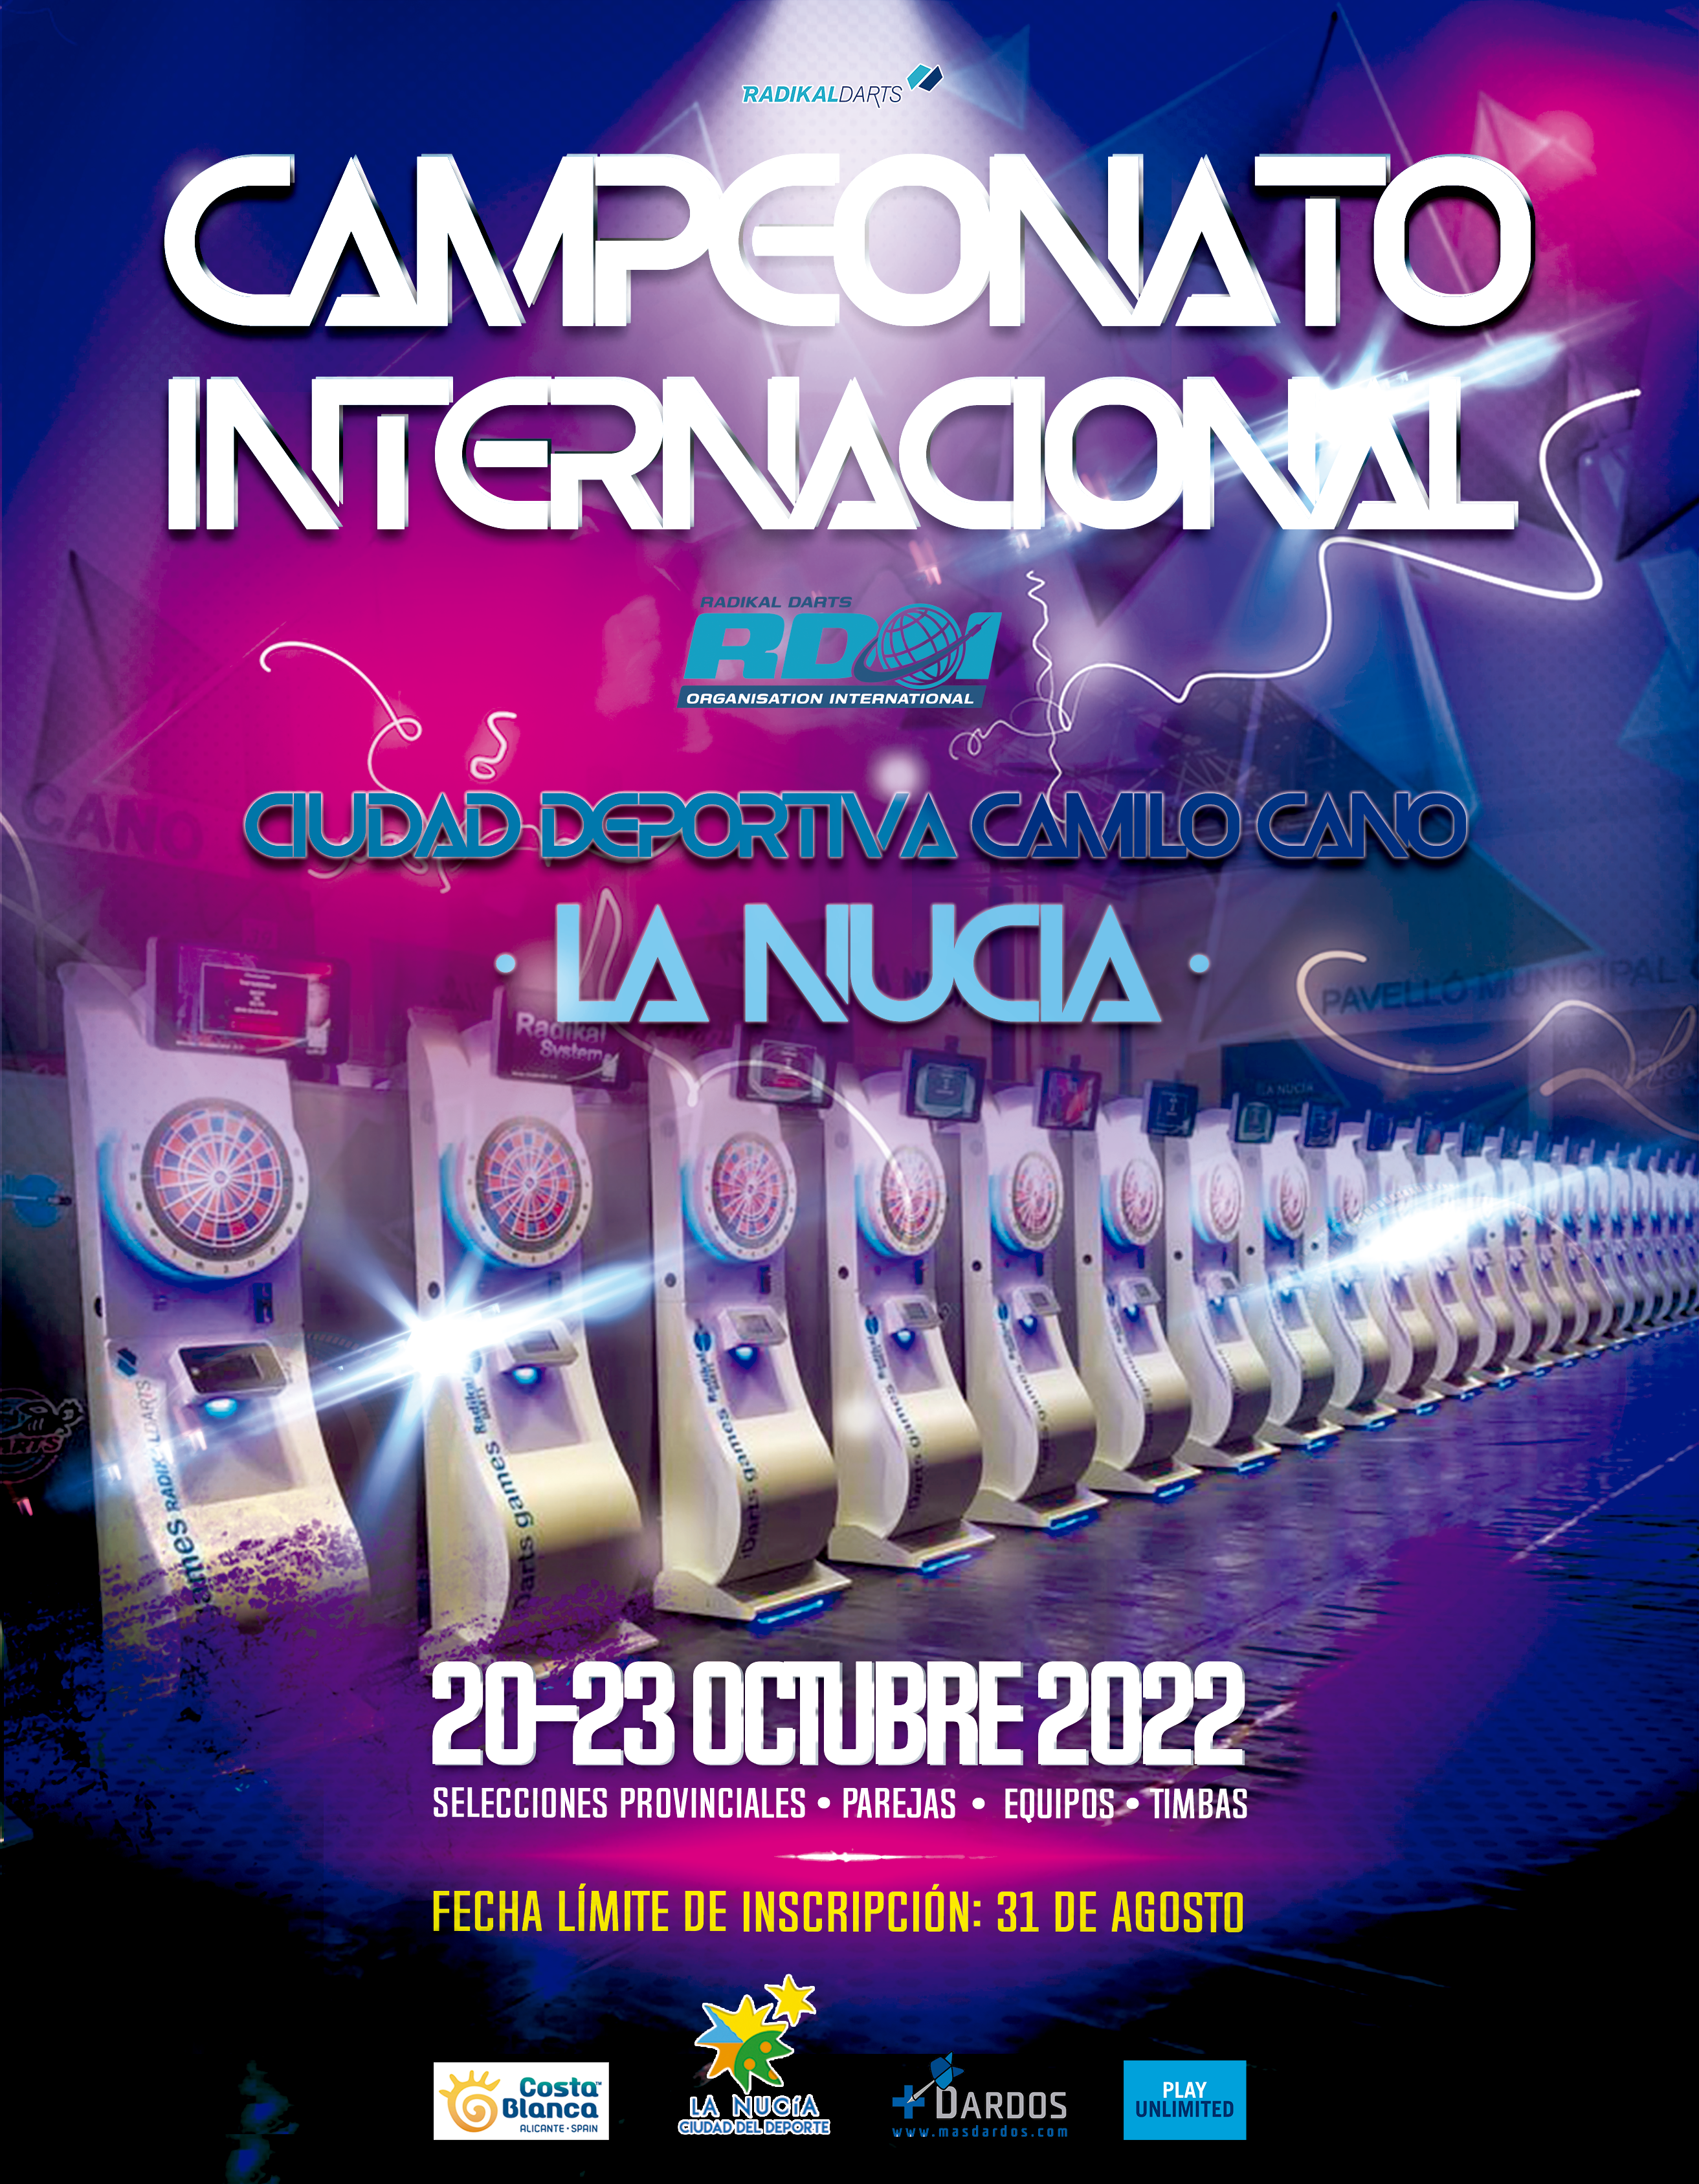 Campeonato Internacional de Dardos Radikal Darts 2022 La Nucia